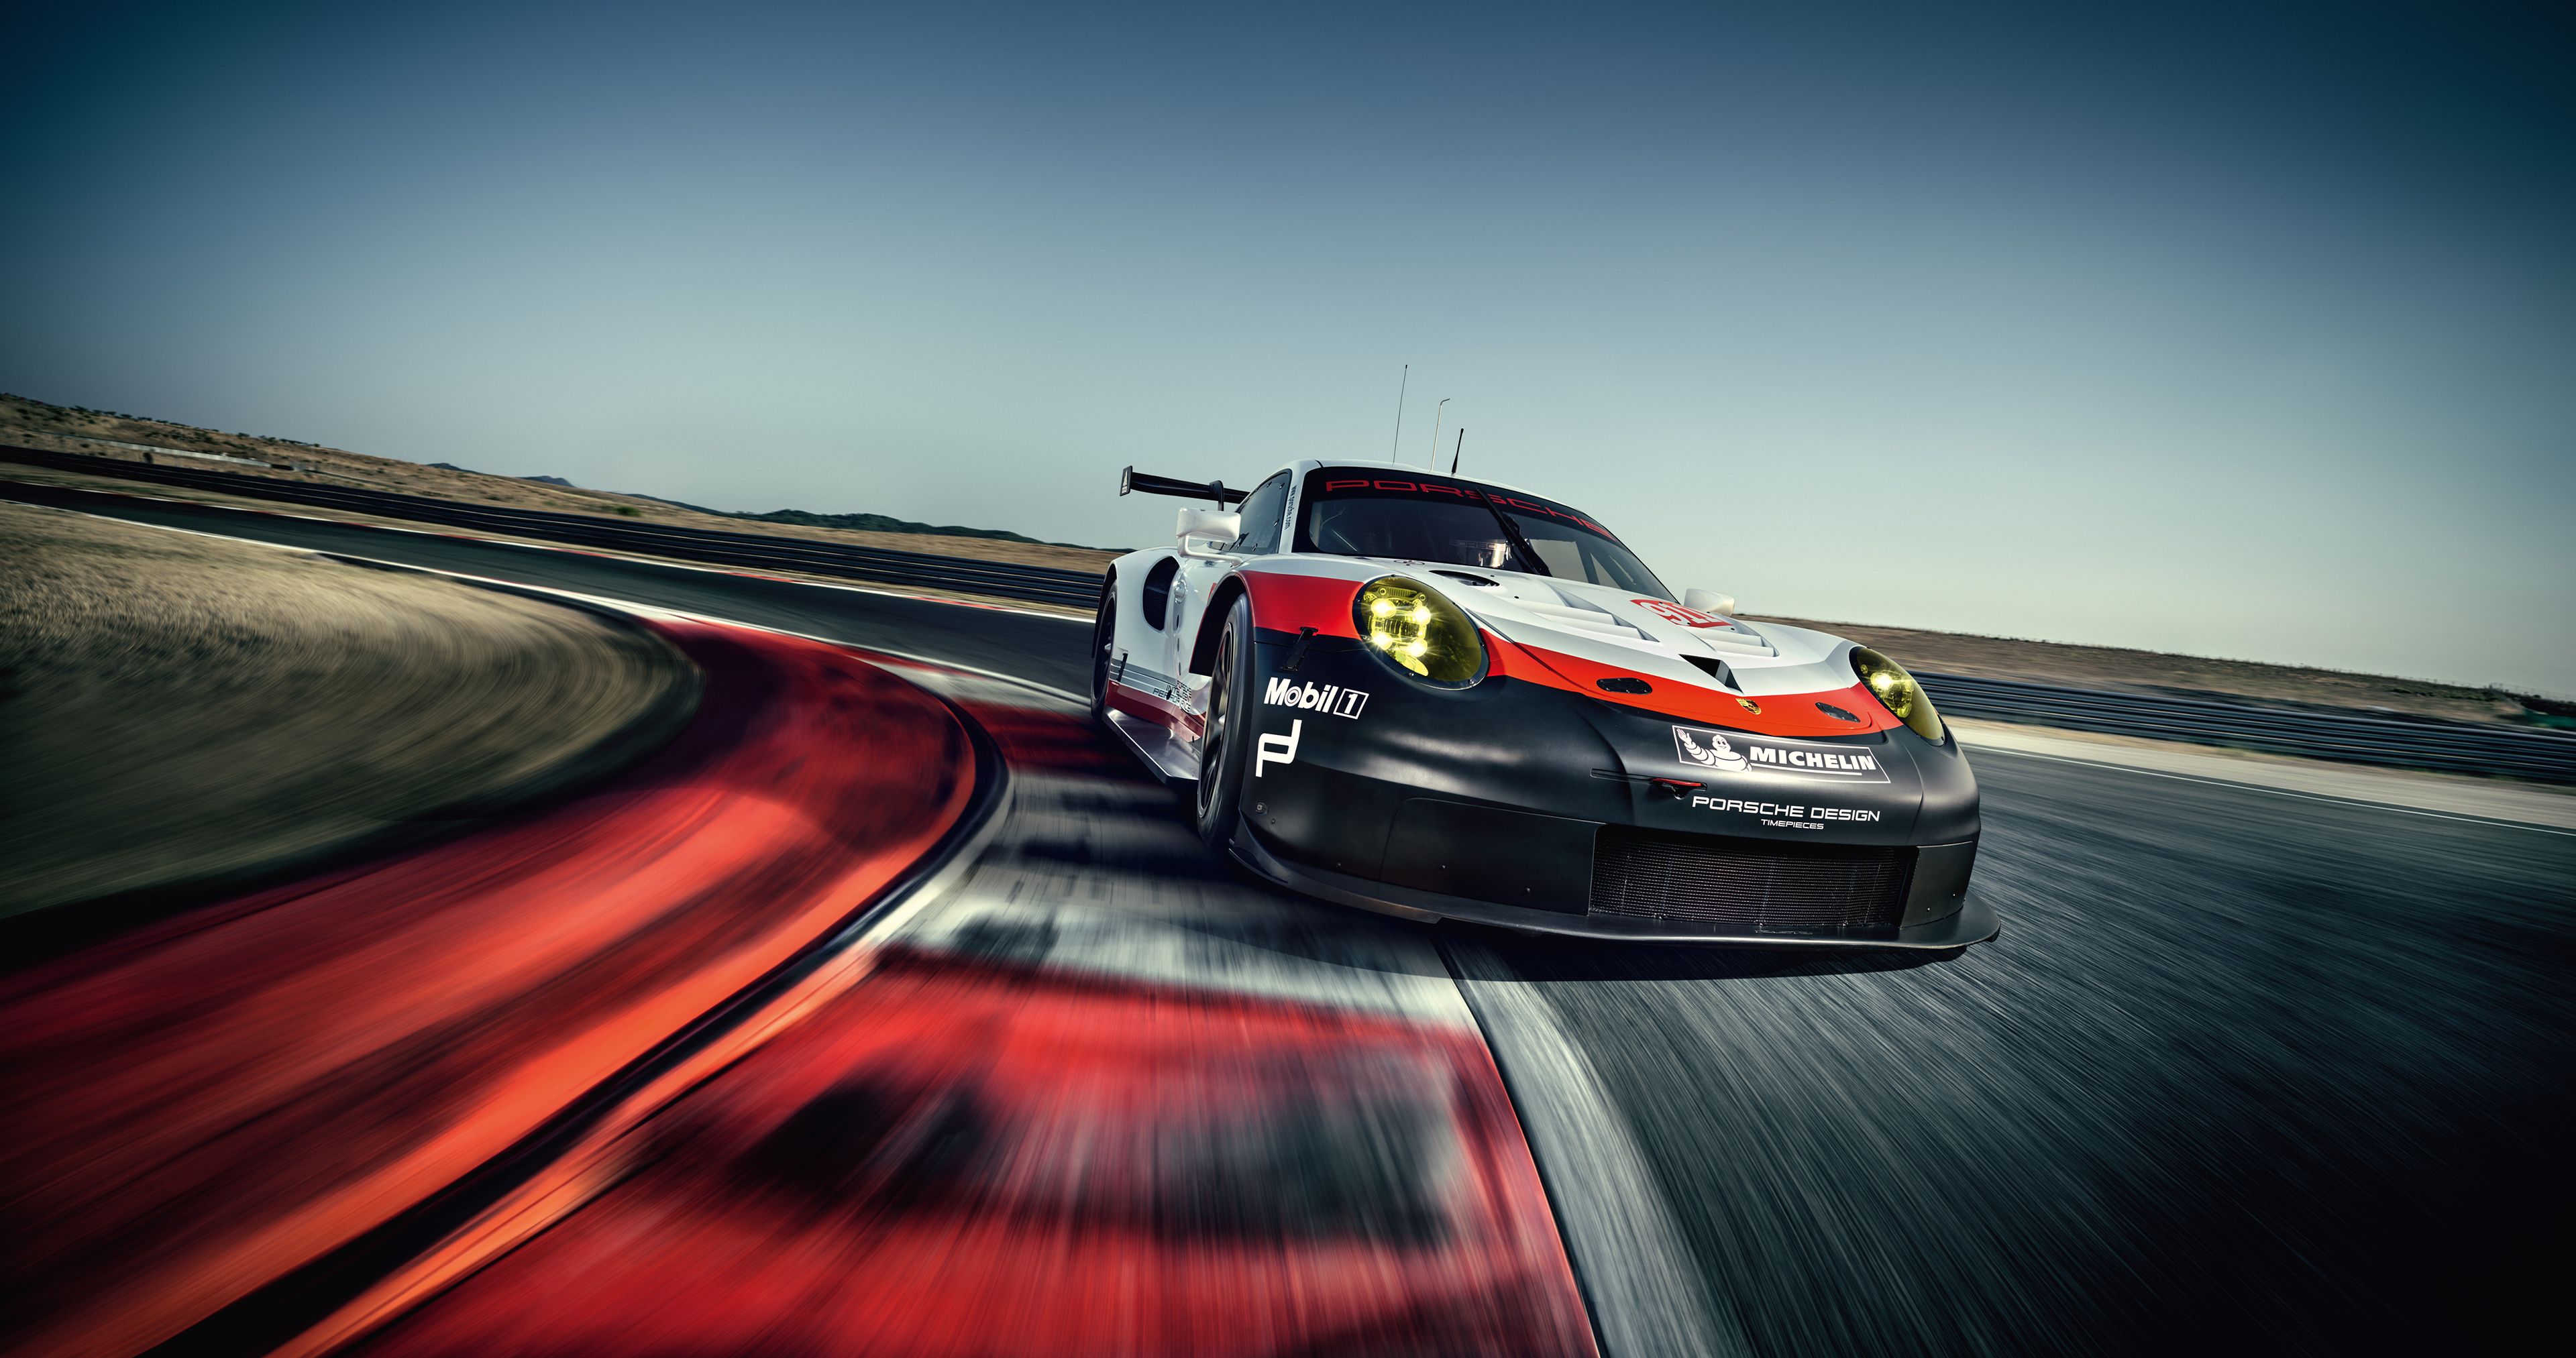 Porsche Wallpapers And Backgrounds 4k Hd Dual Screen - vrogue.co